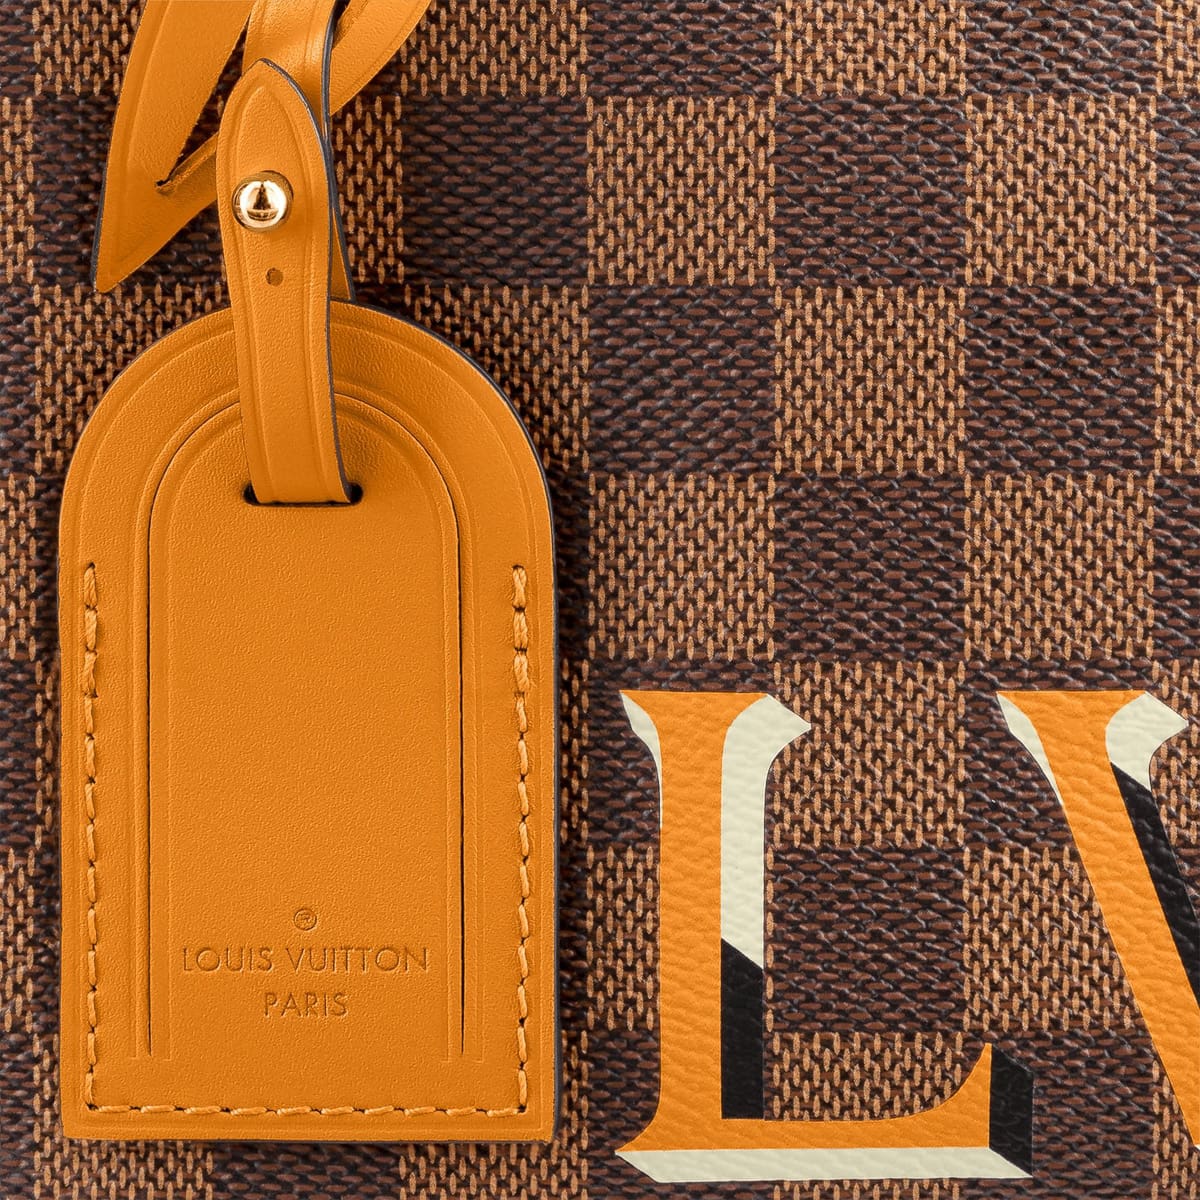 Louis Vuitton Santa Monica Demier Ebene Crossbody Bag Brown